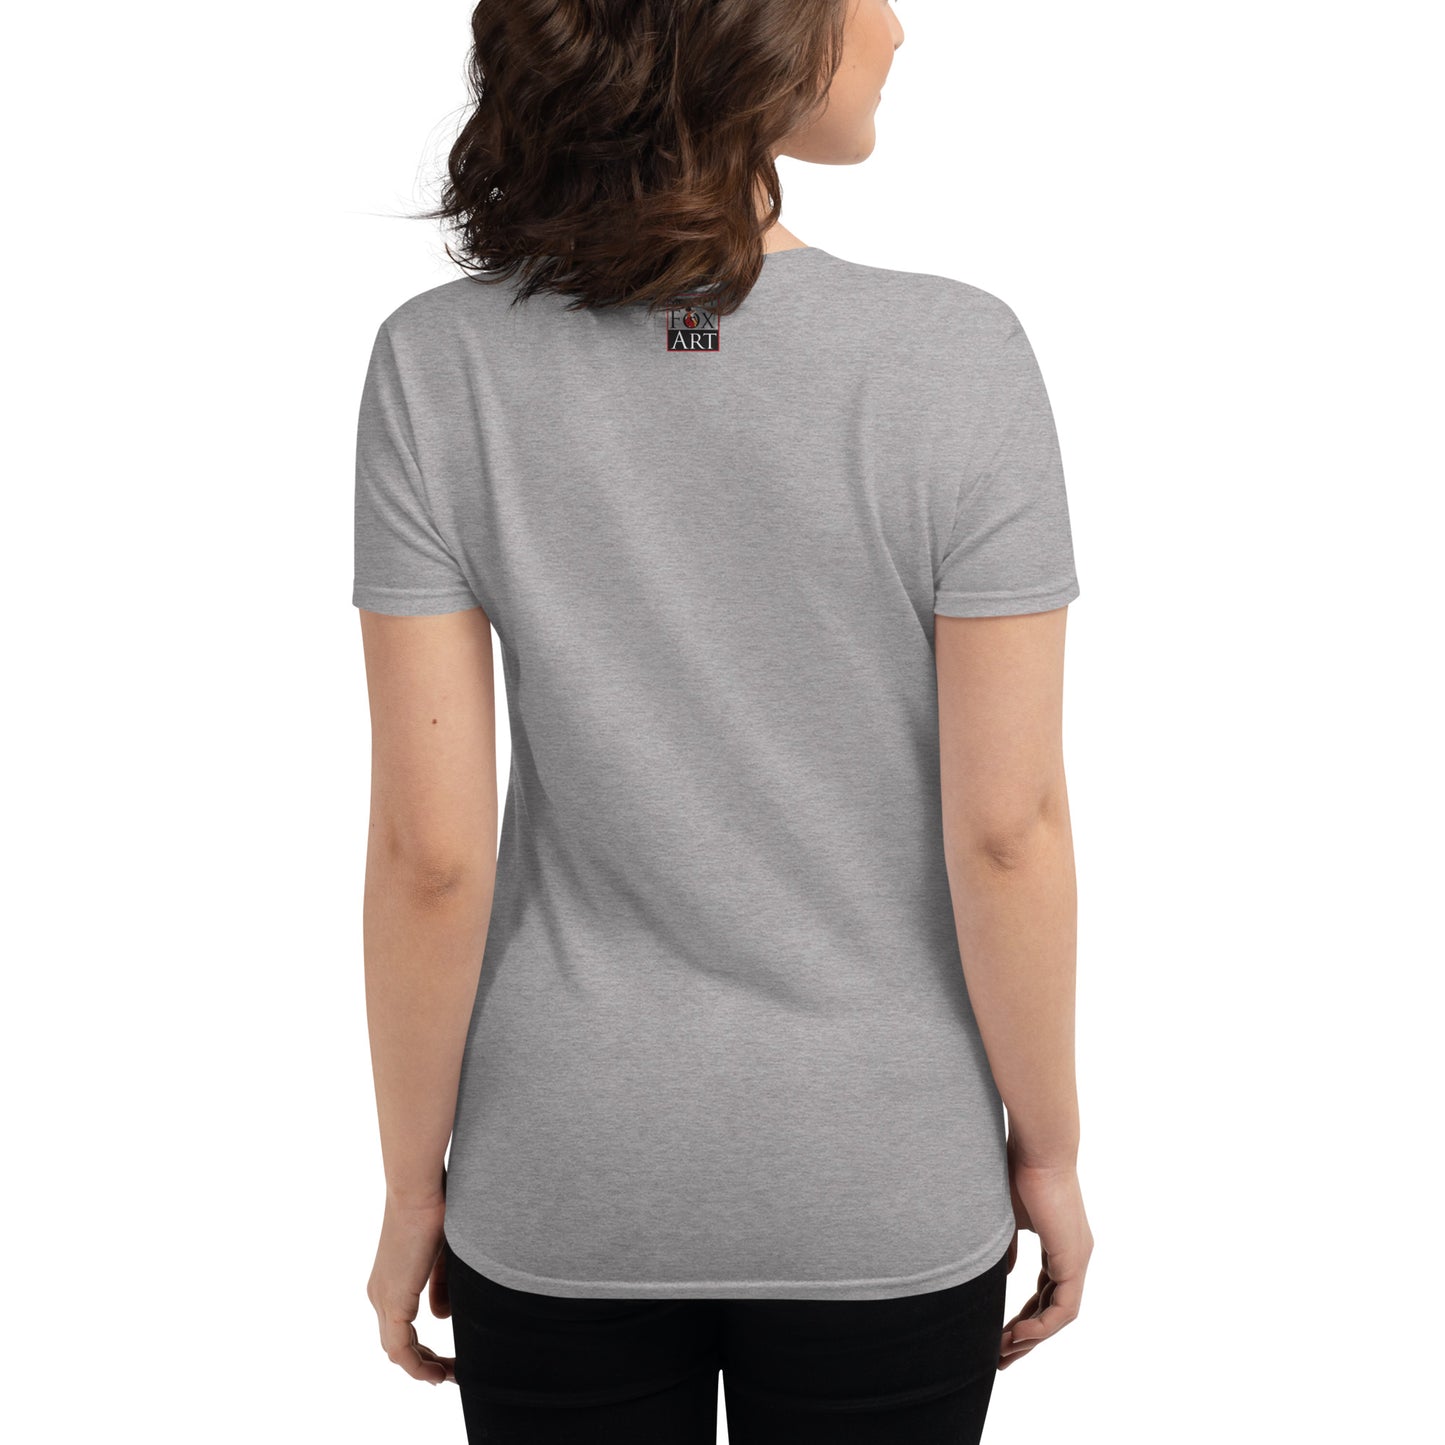 Snooty Fox Art Women's Short Sleeve T-shirt - Just Vote